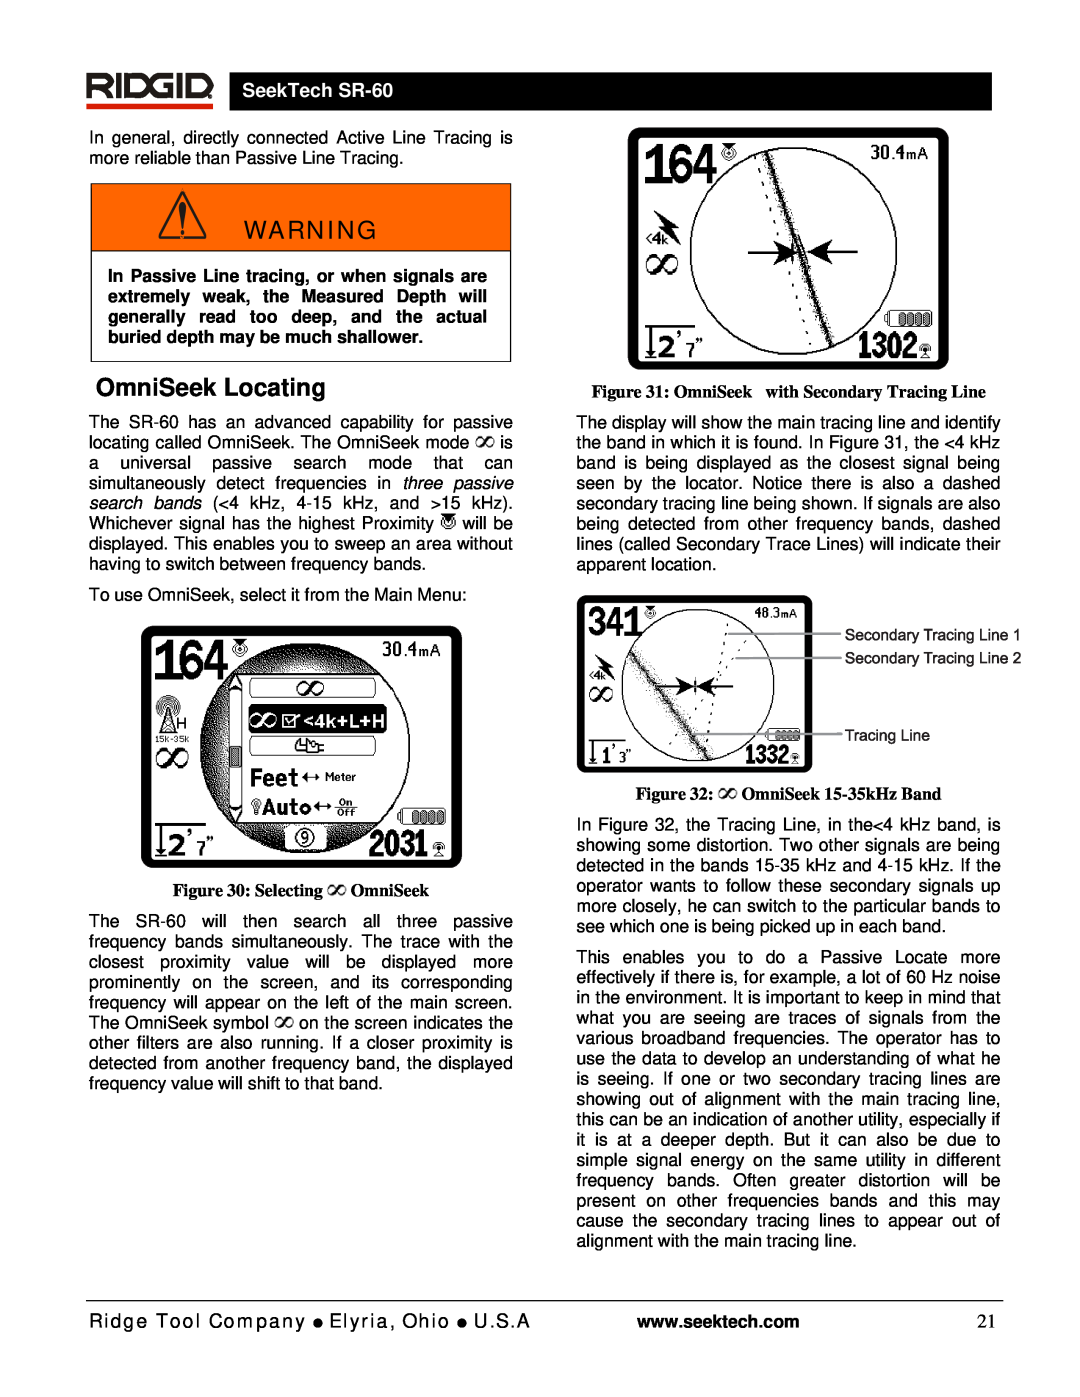 RIDGID SR-60 manual OmniSeek Locating, Selecting OmniSeek, OmniSeek with Secondary Tracing Line, OmniSeek 15-35kHz Band 